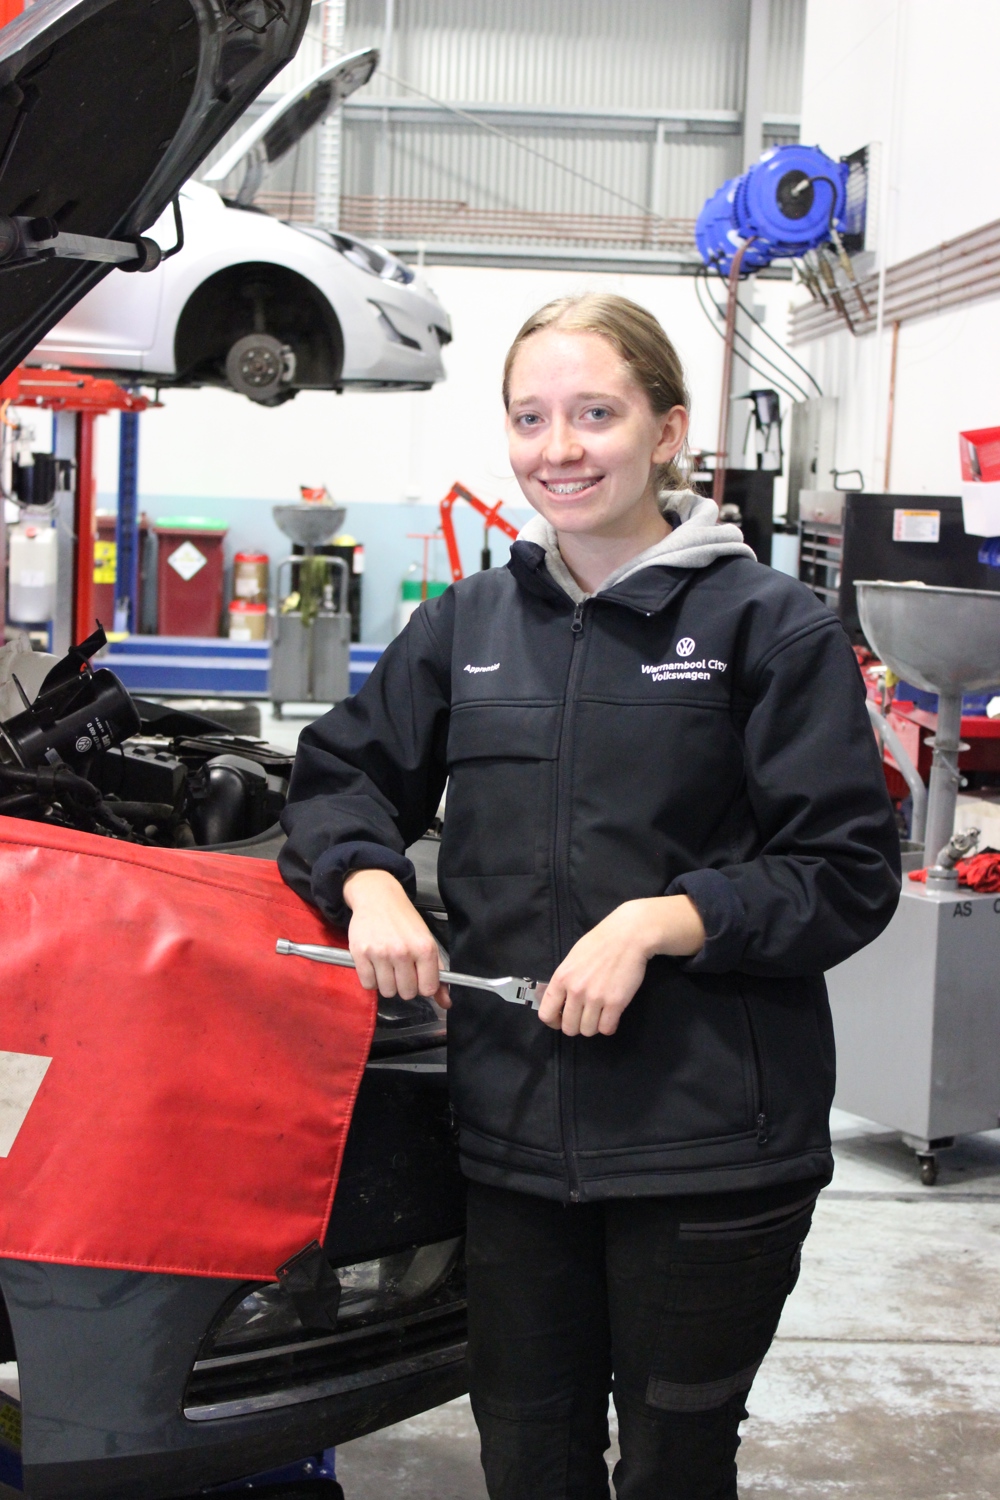 Cayla working in automotive maintenance